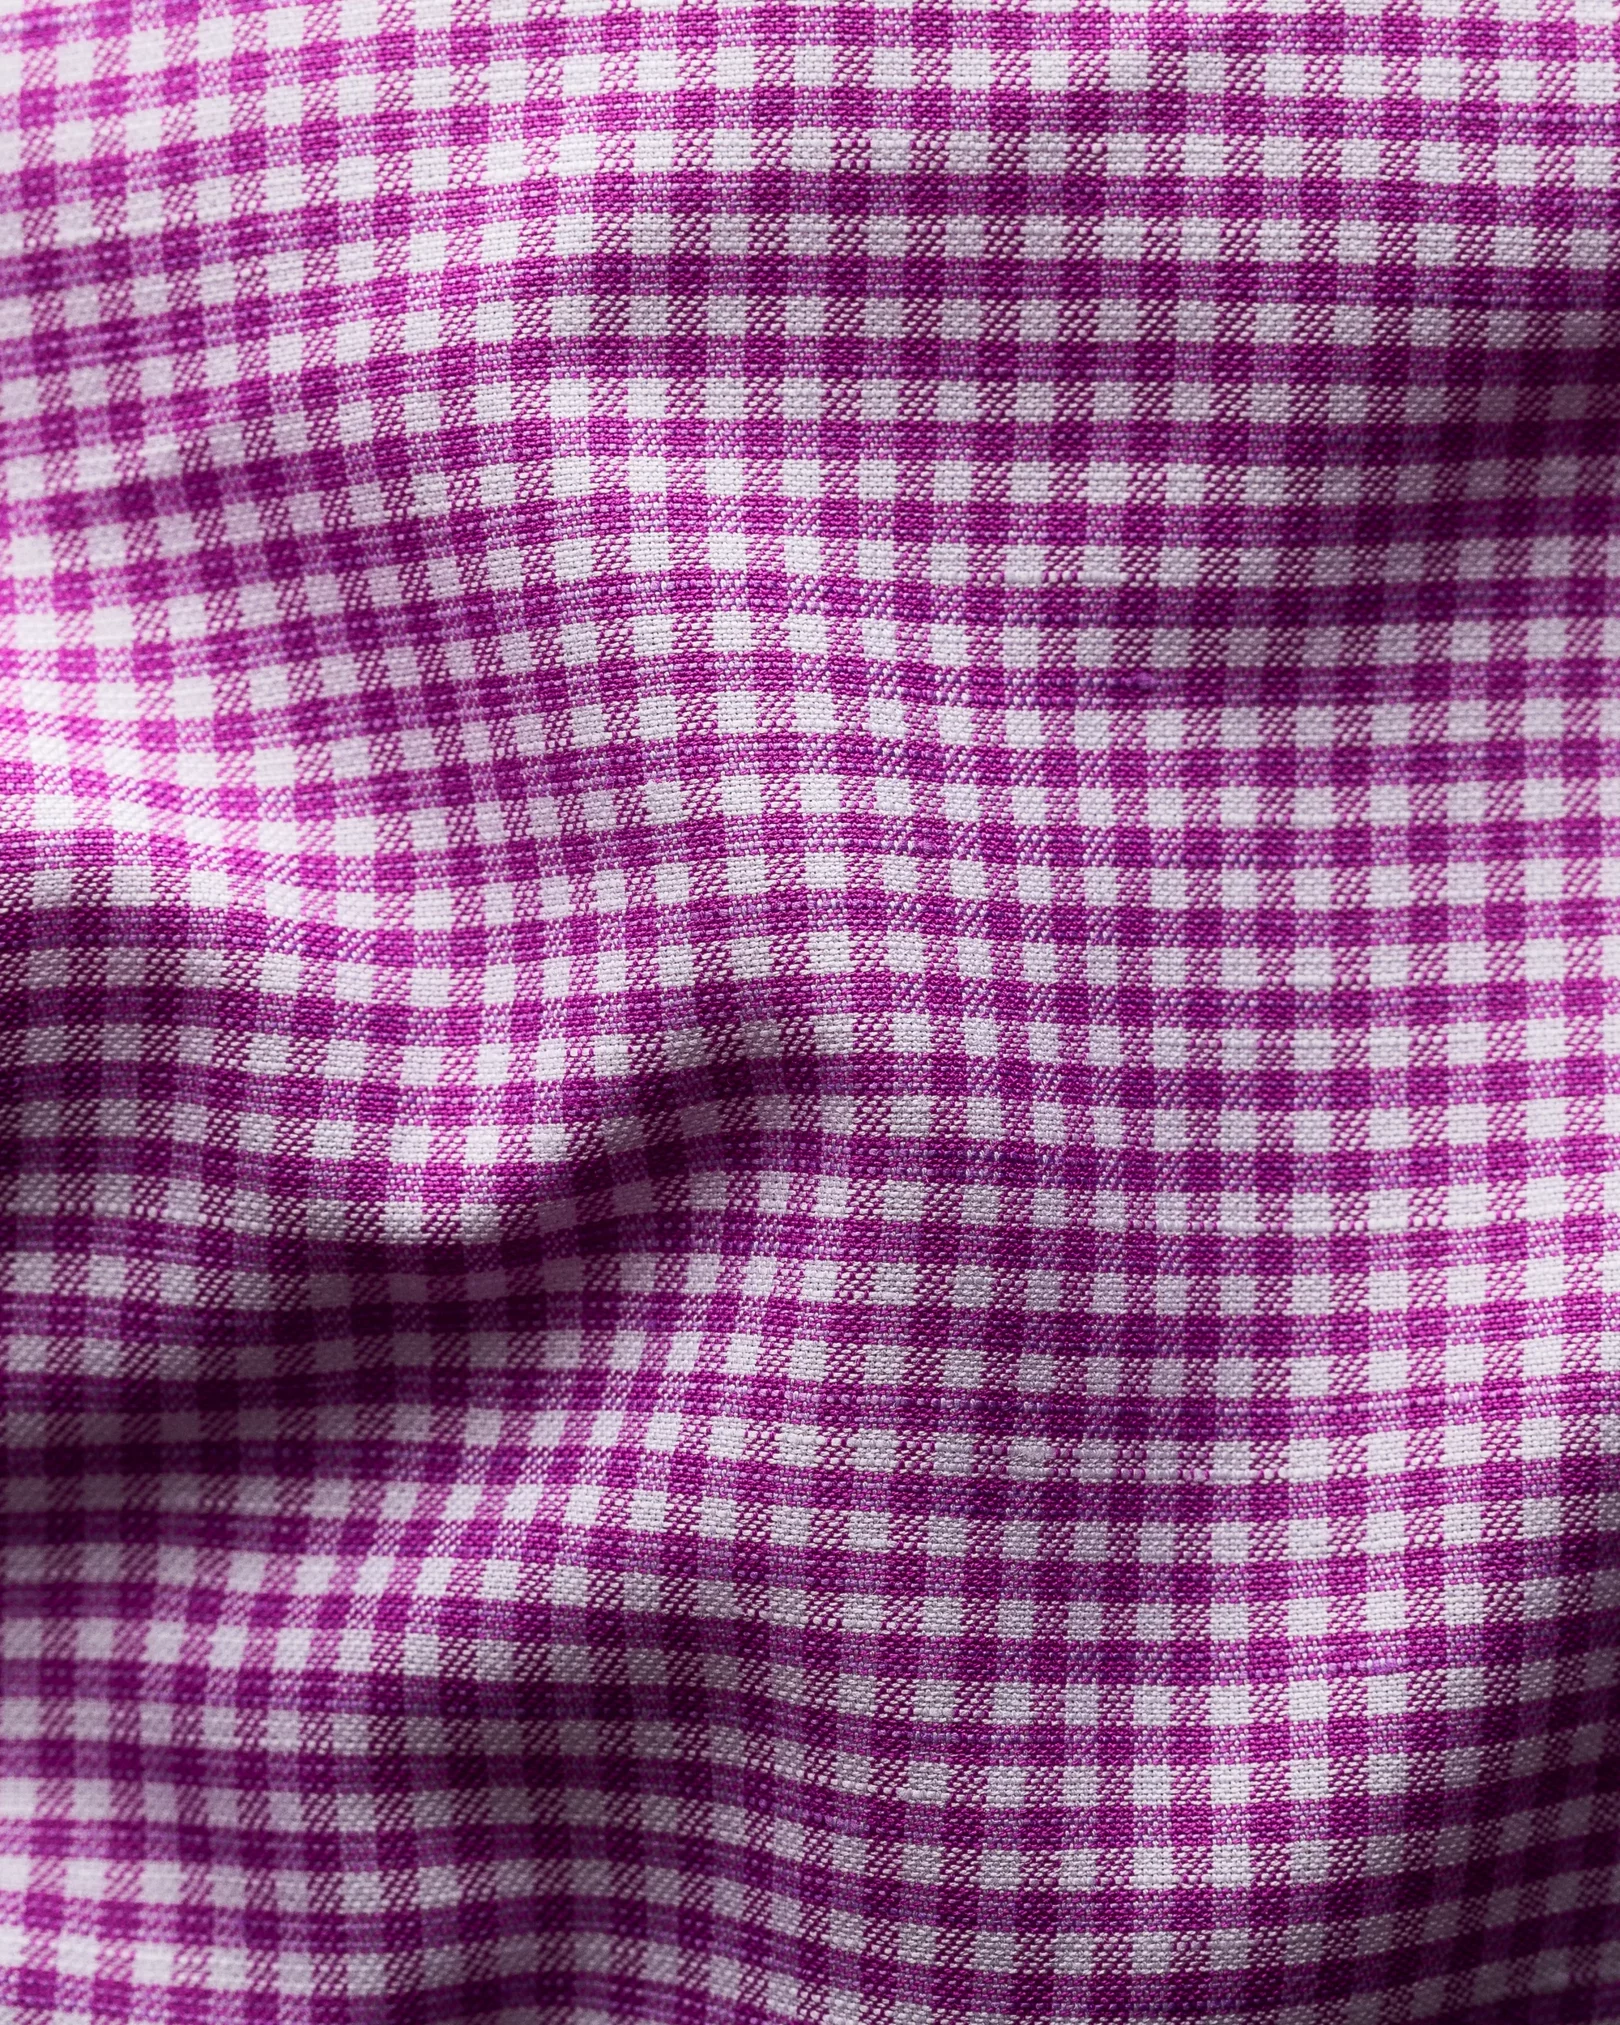 Eton - purple checked cotton and linen shirt